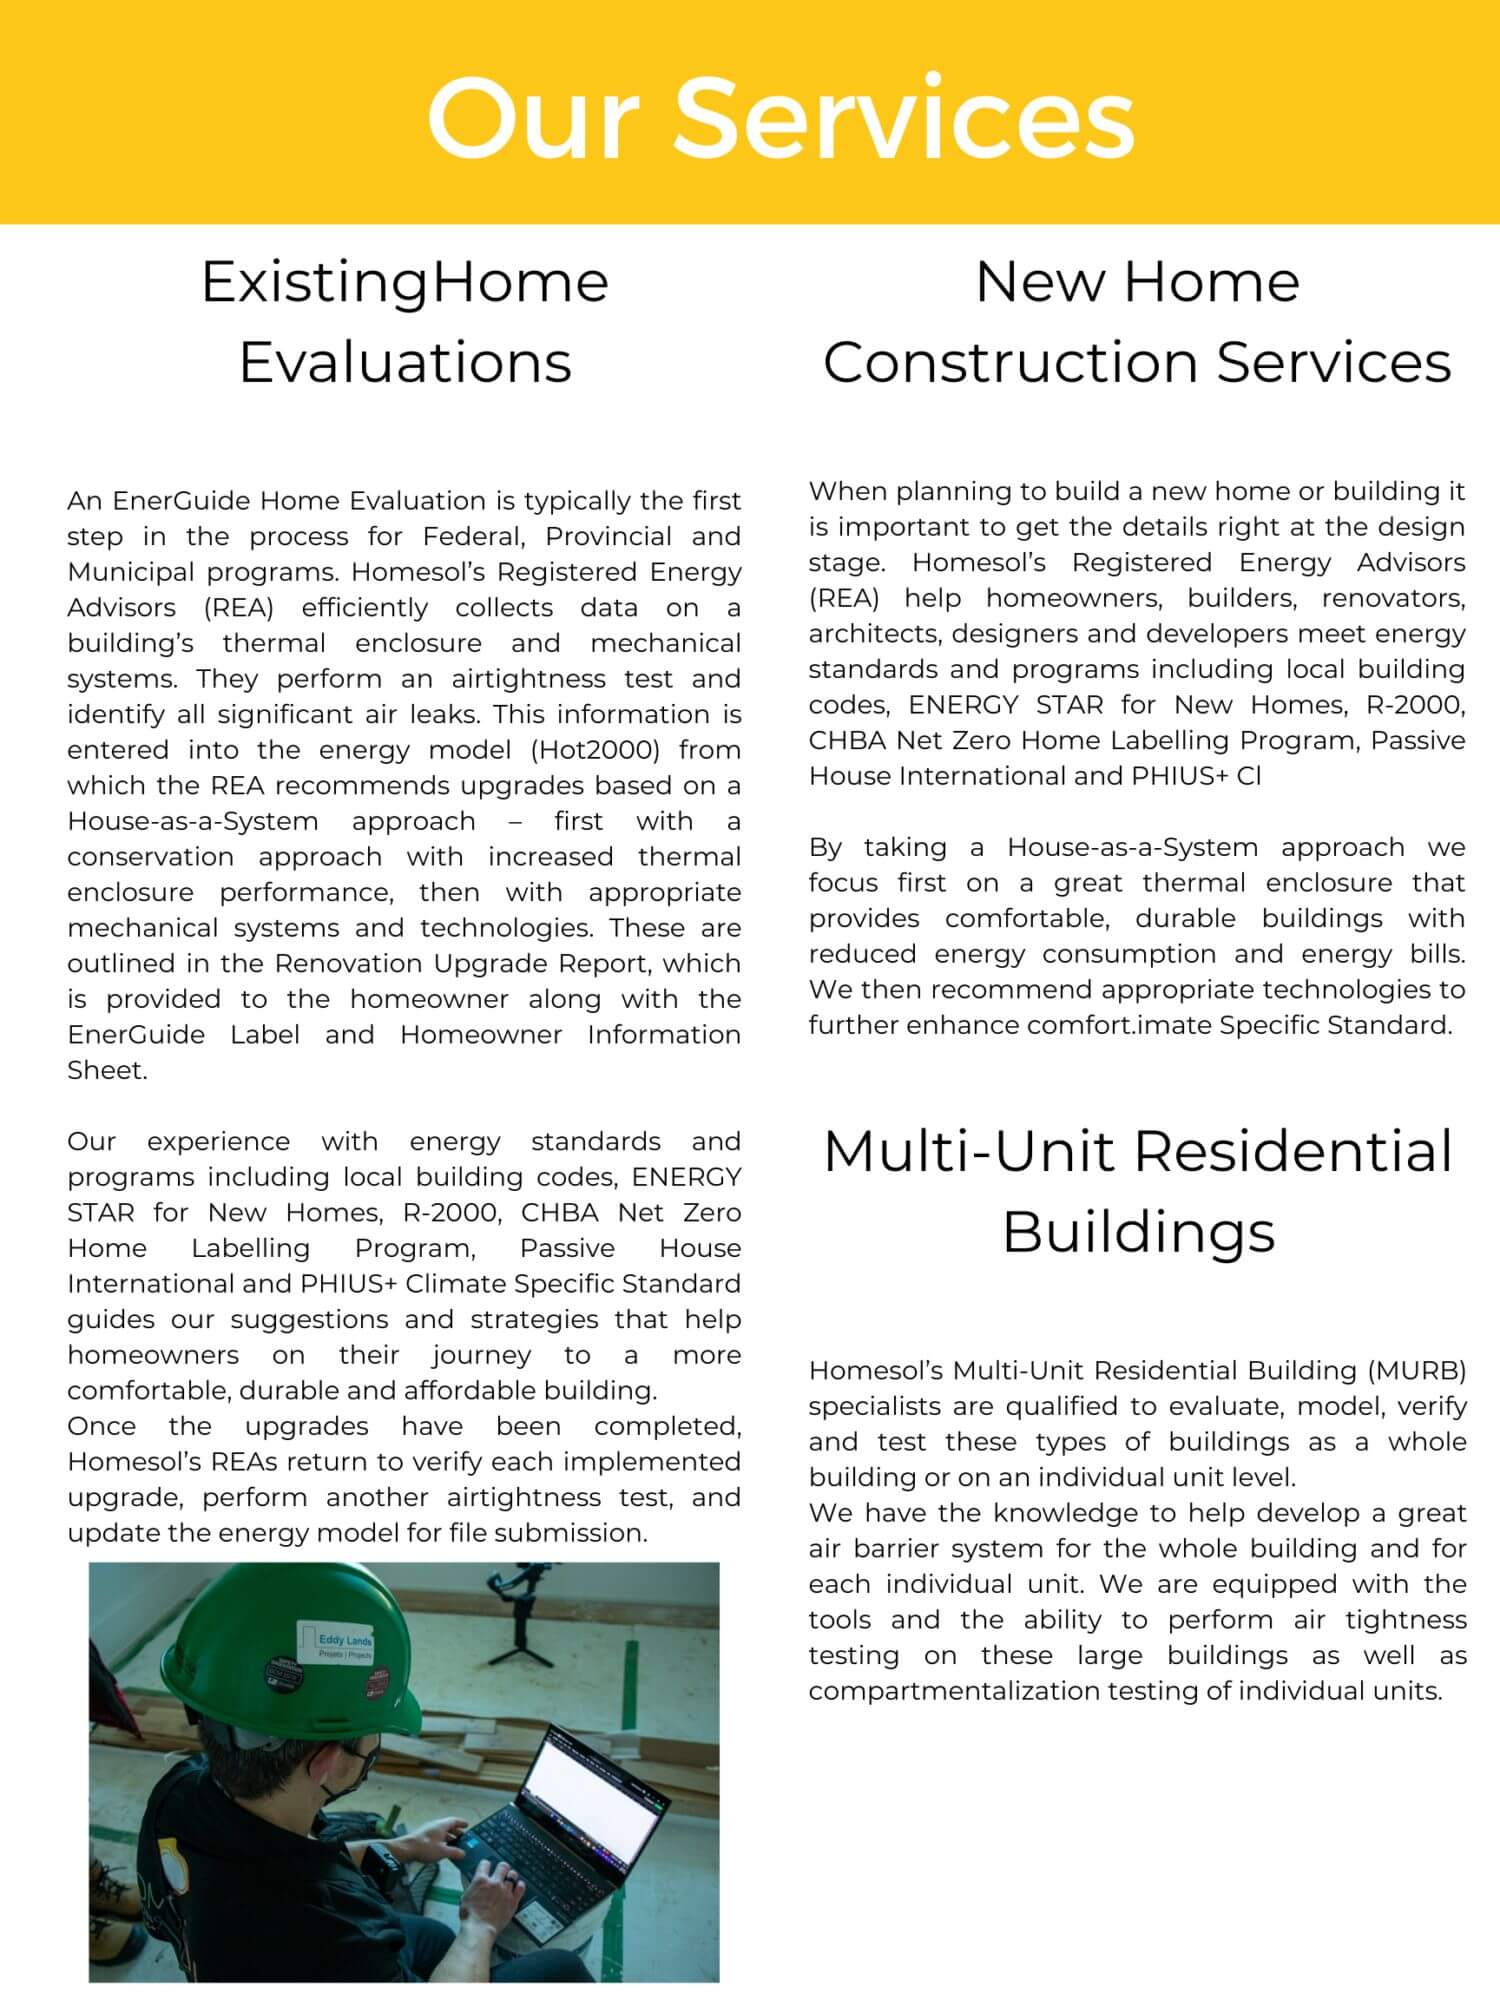 Homesol Building Solutions